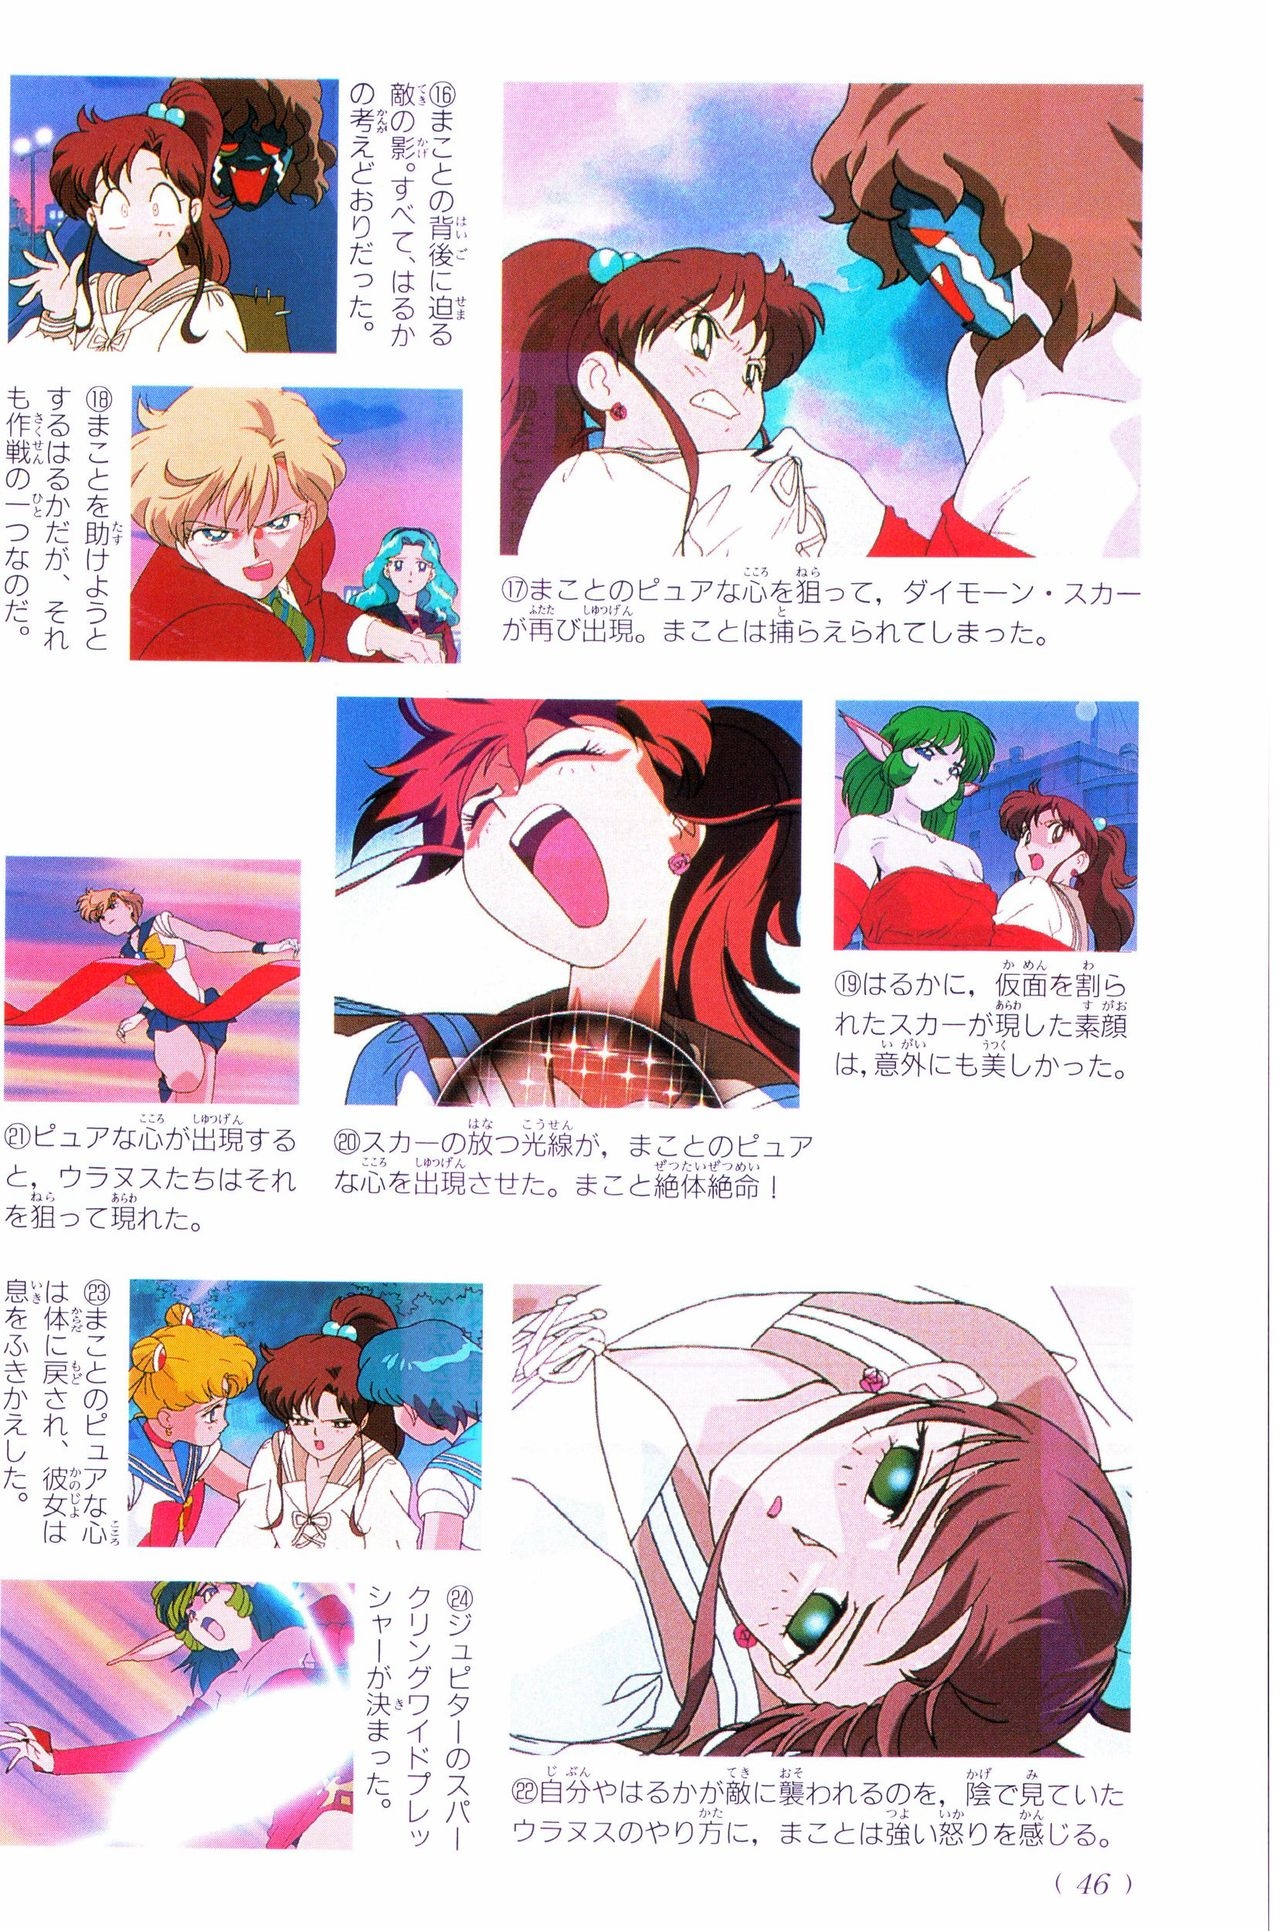 Sailor Moon Official Fan Book – Sailor Jupiter 37